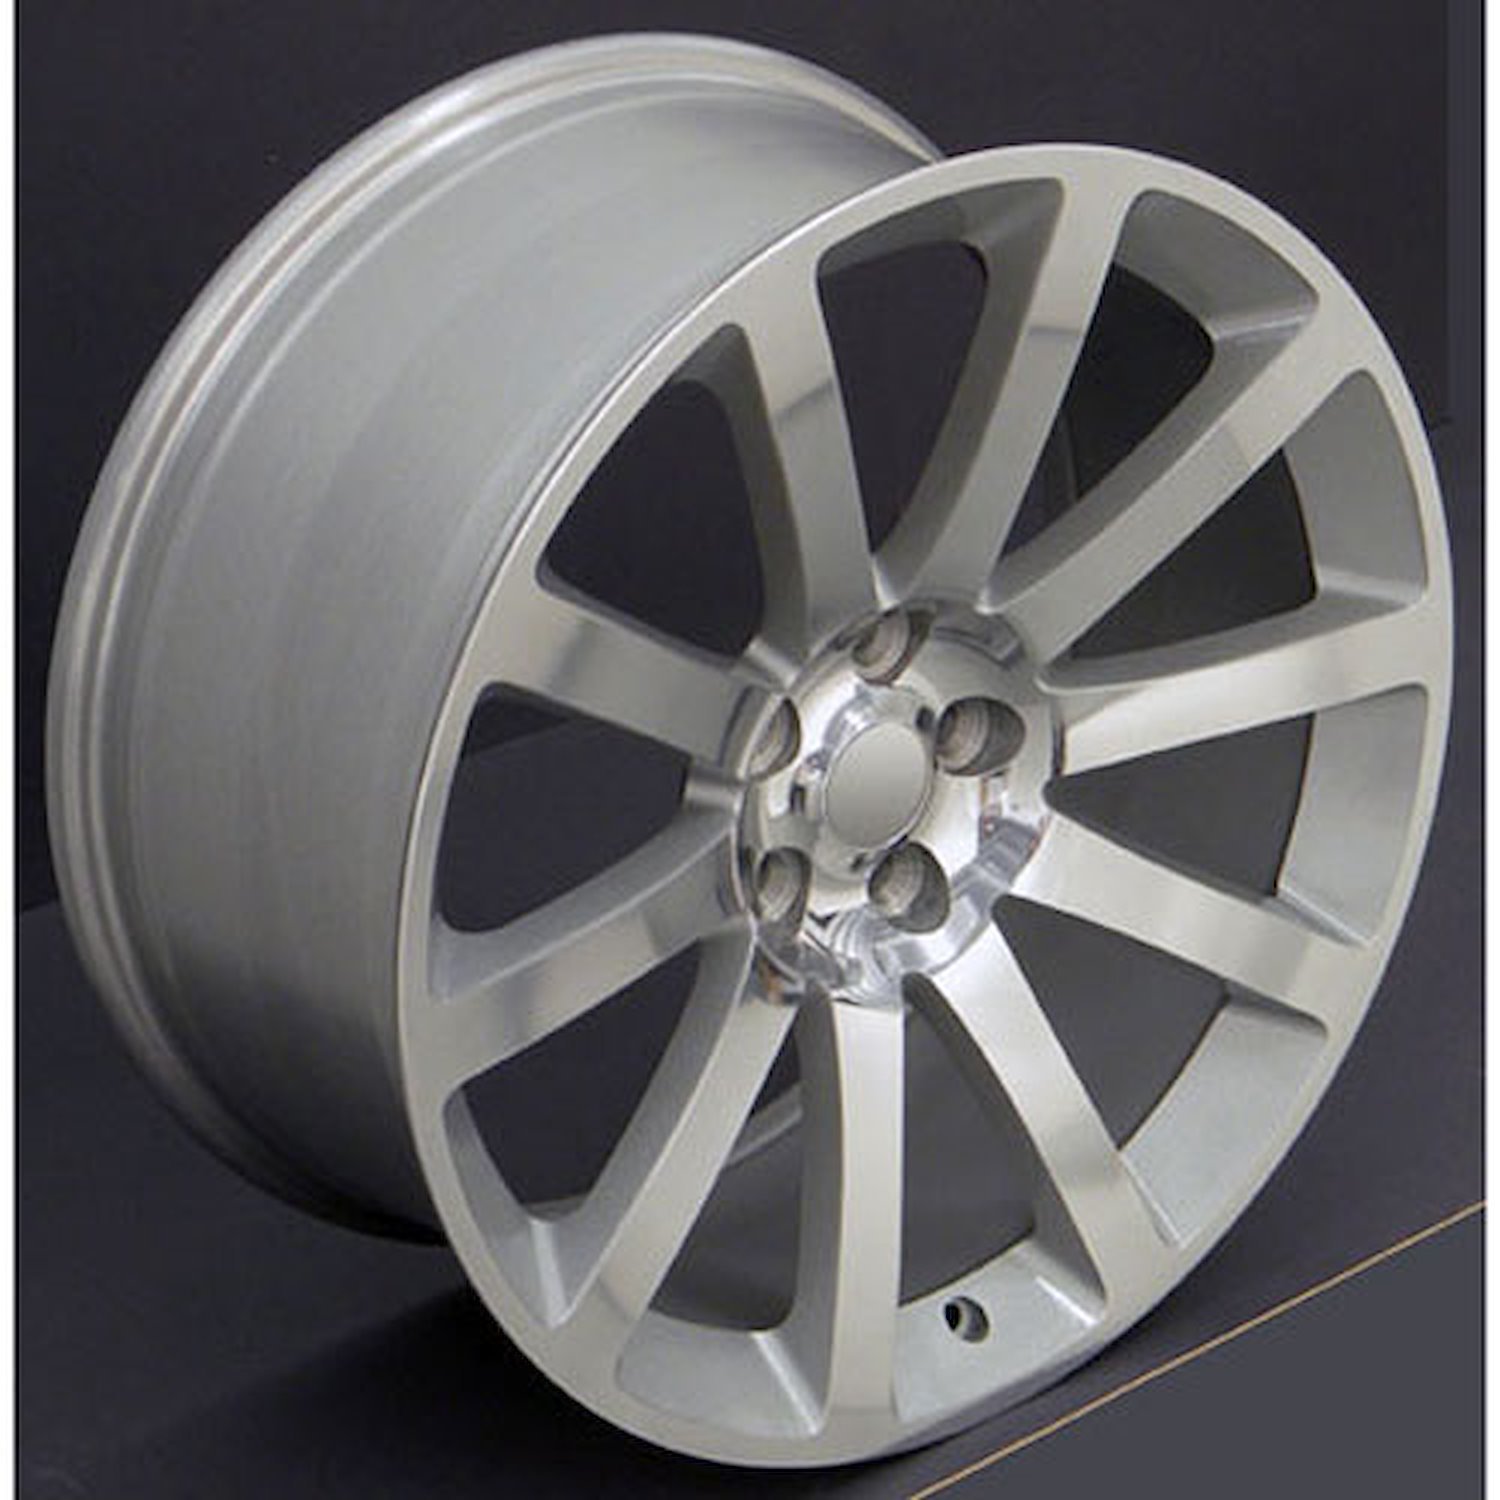 *Chrysler 300 SRT Style Wheel Size: 22" x 9"